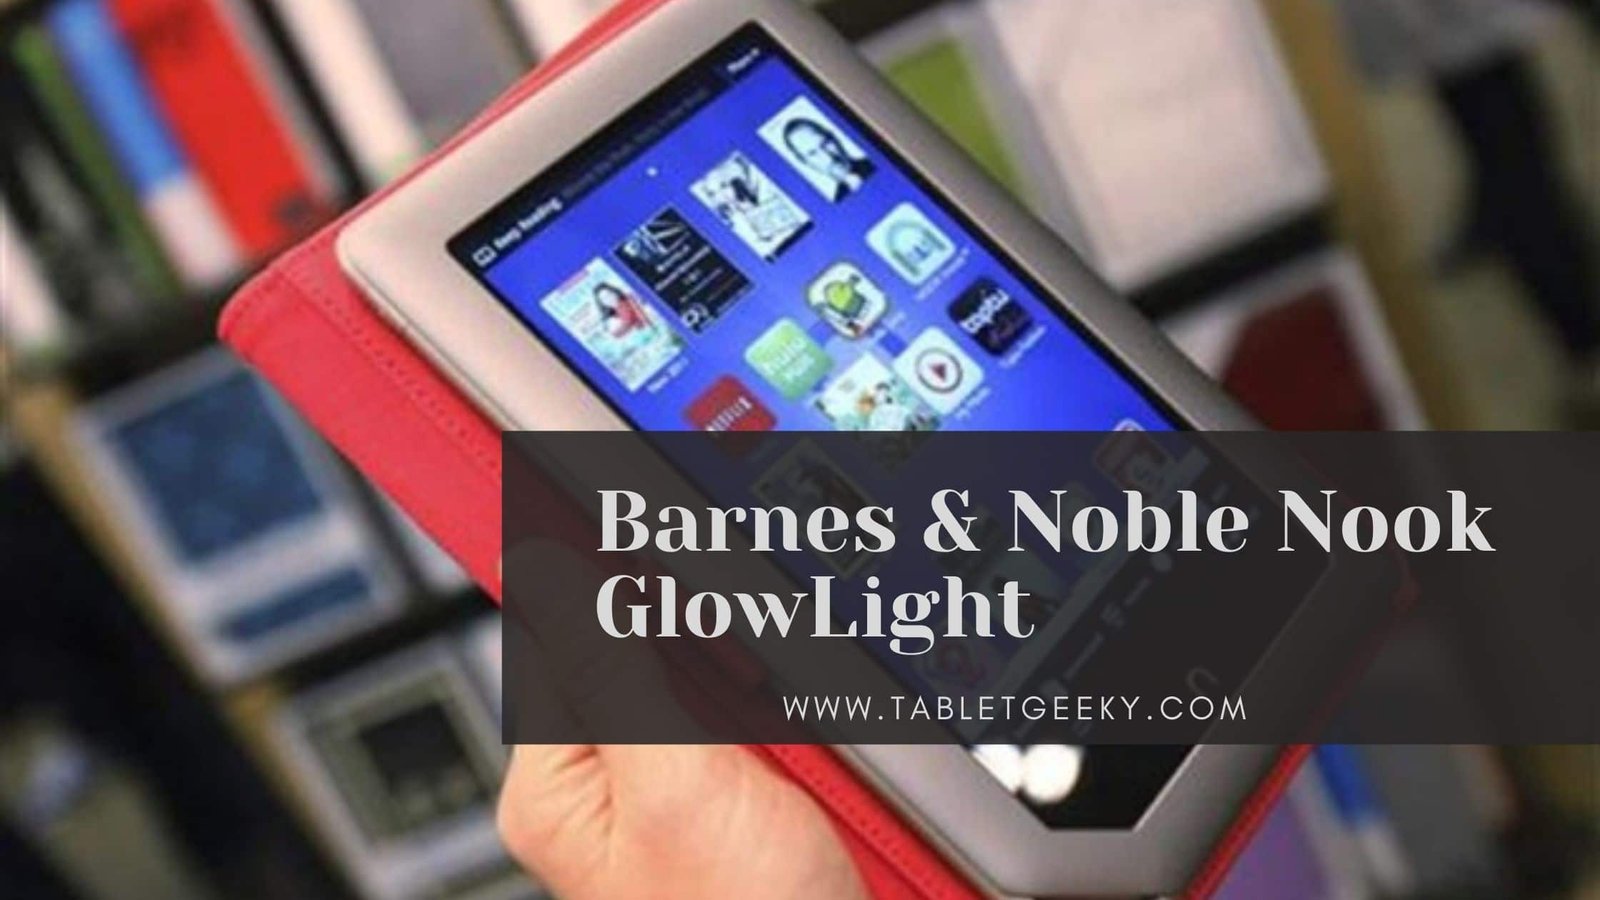 Barnes & Noble NOOK GlowLight